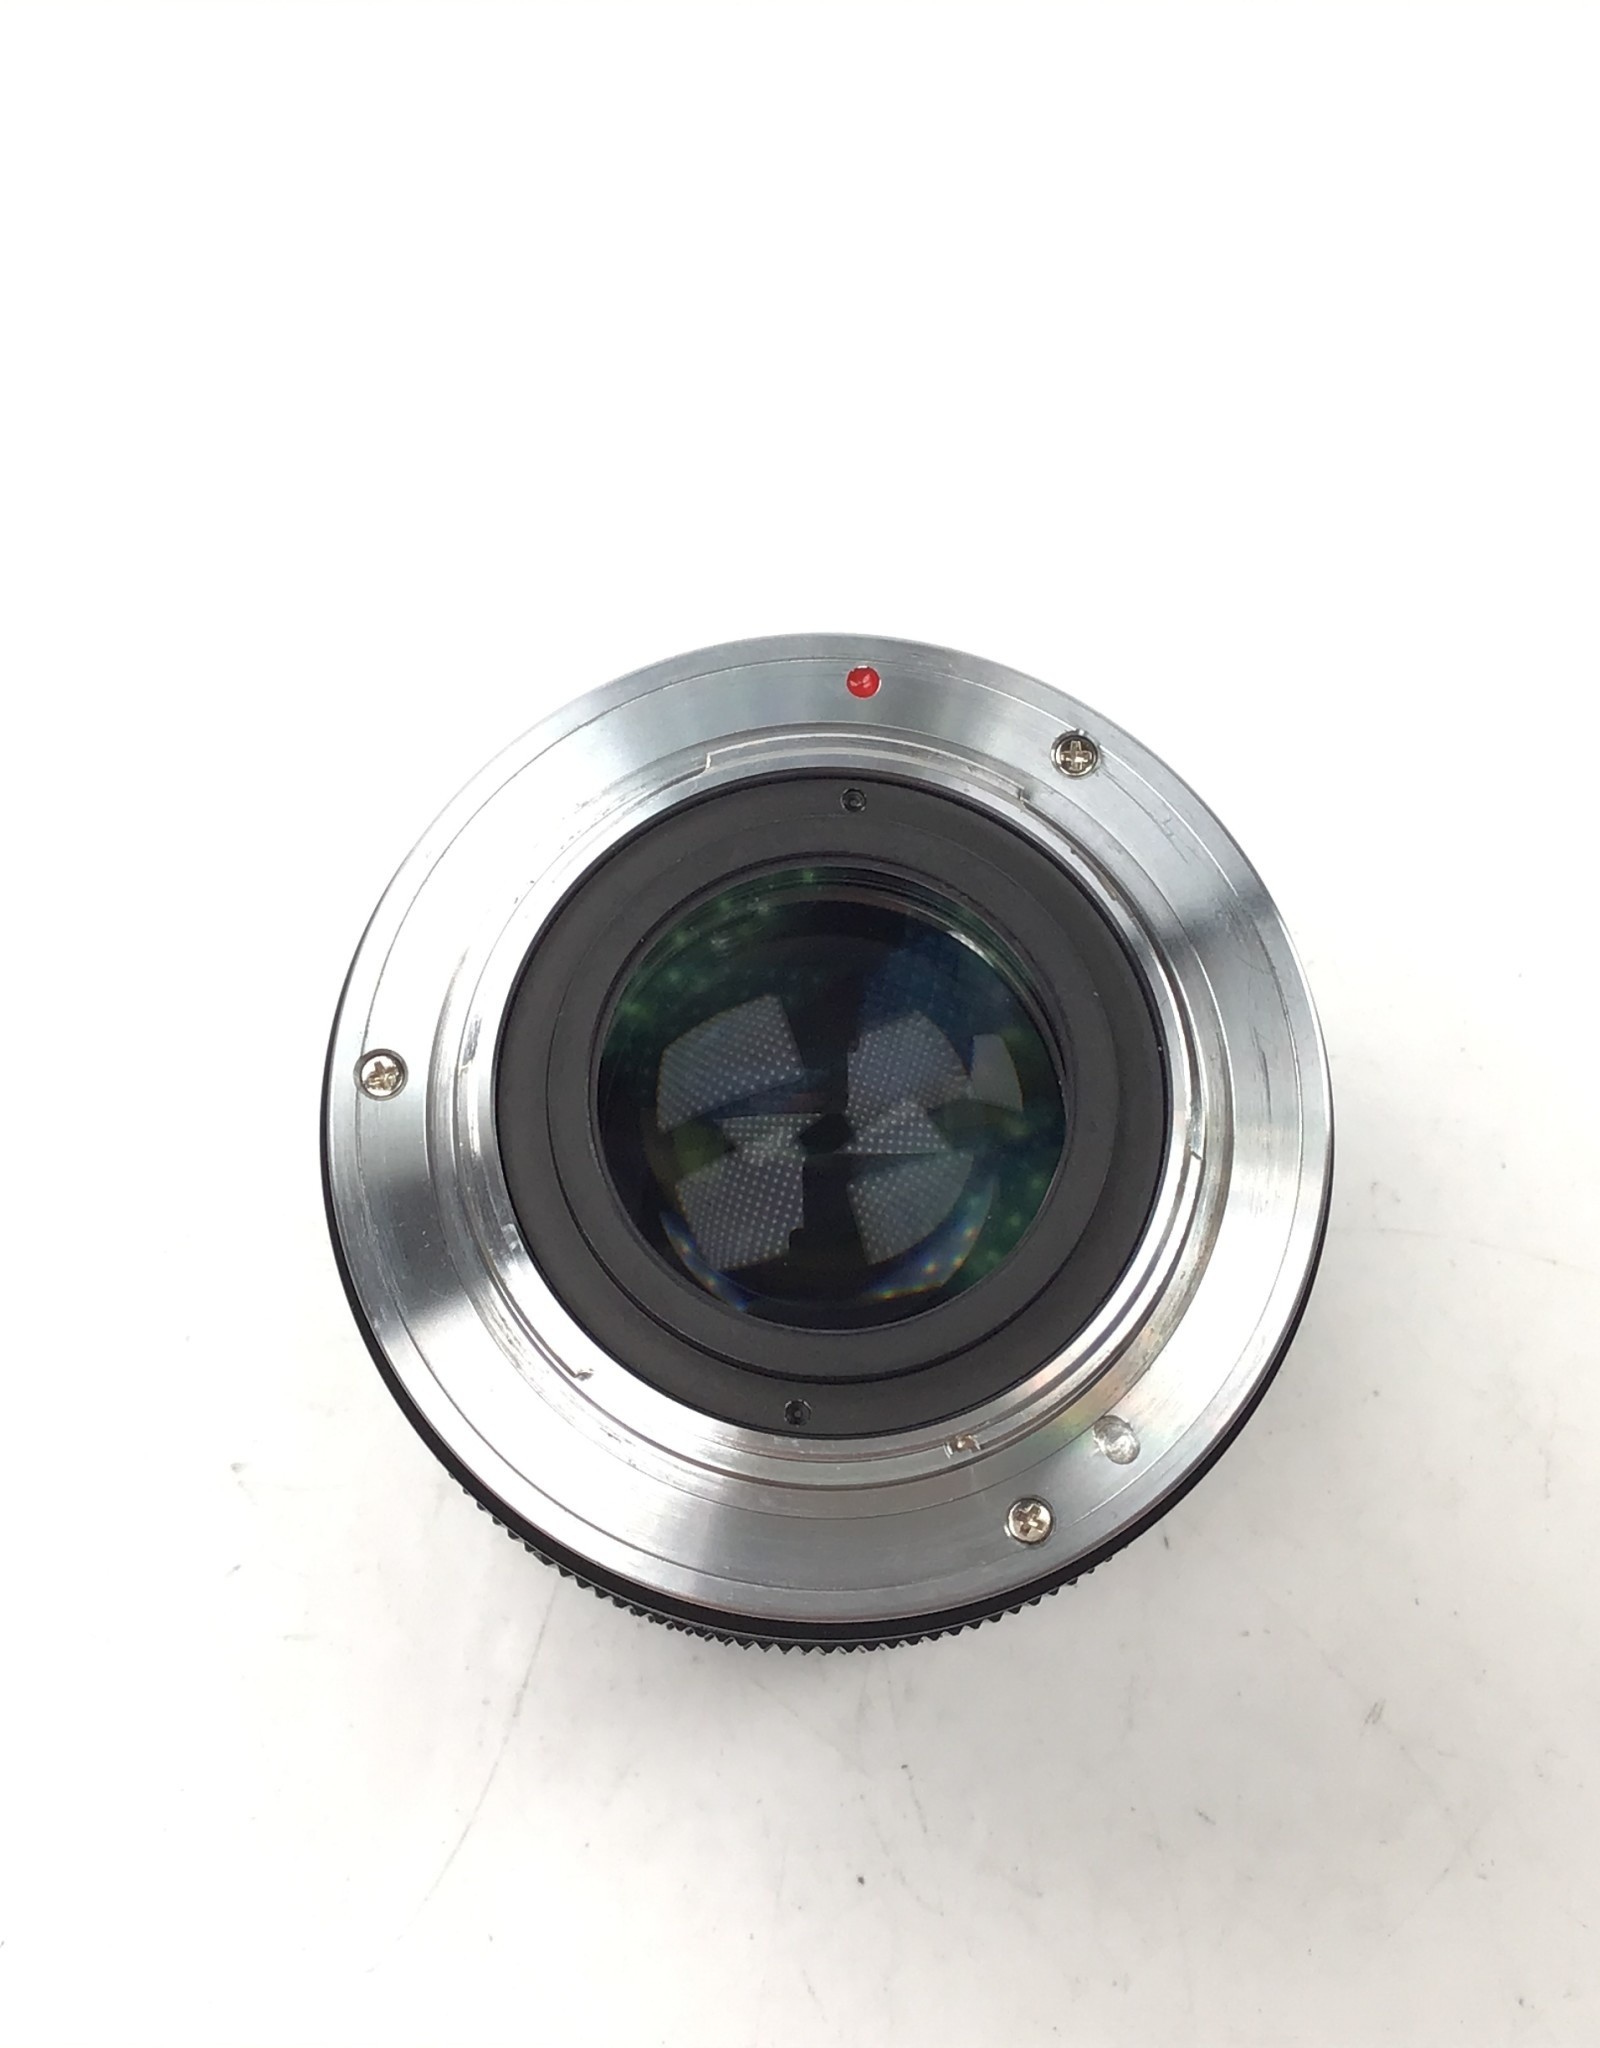 Zhongyi Speedmaster 35mm 0.95 Lens for Fuji X Used Good